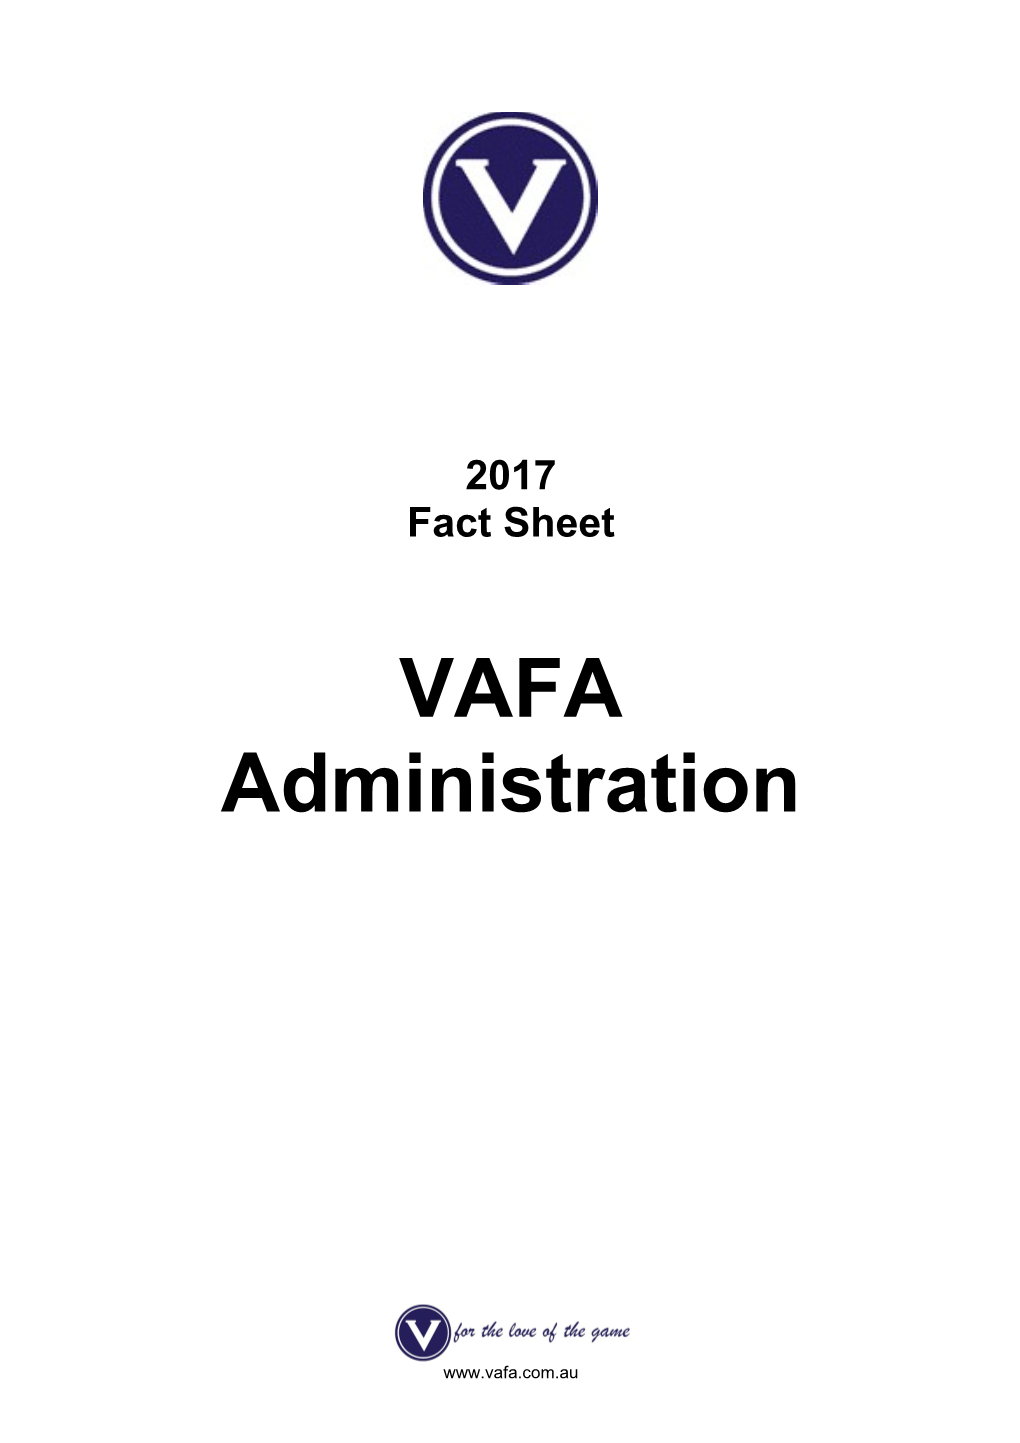 VAFA Administration